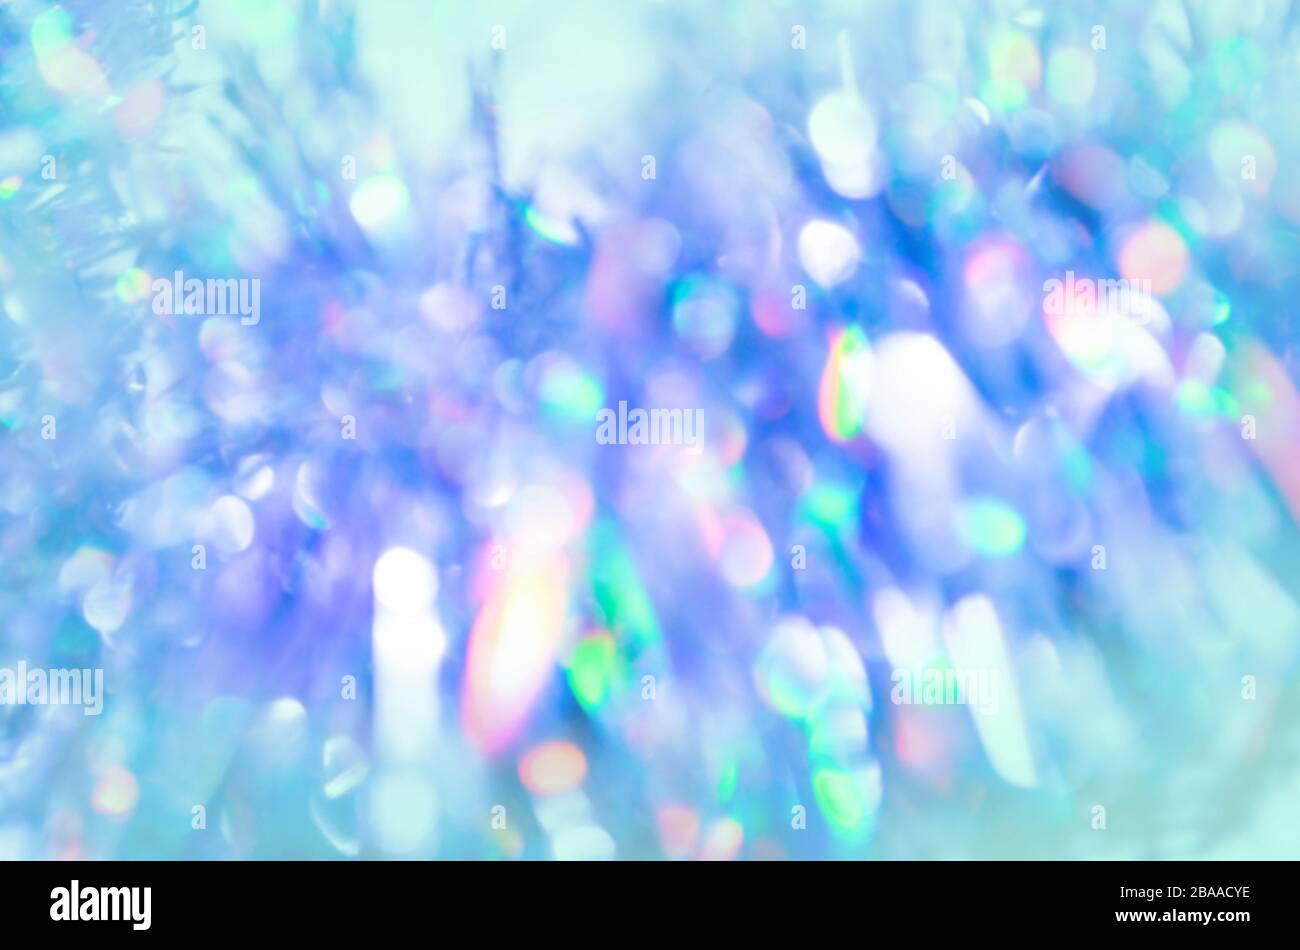 Winter seasonal bokeh background. Blue bokeh light backgrounds. Blue bubble background. Abstract blurred reflection lighting on blue background. Stock Photo